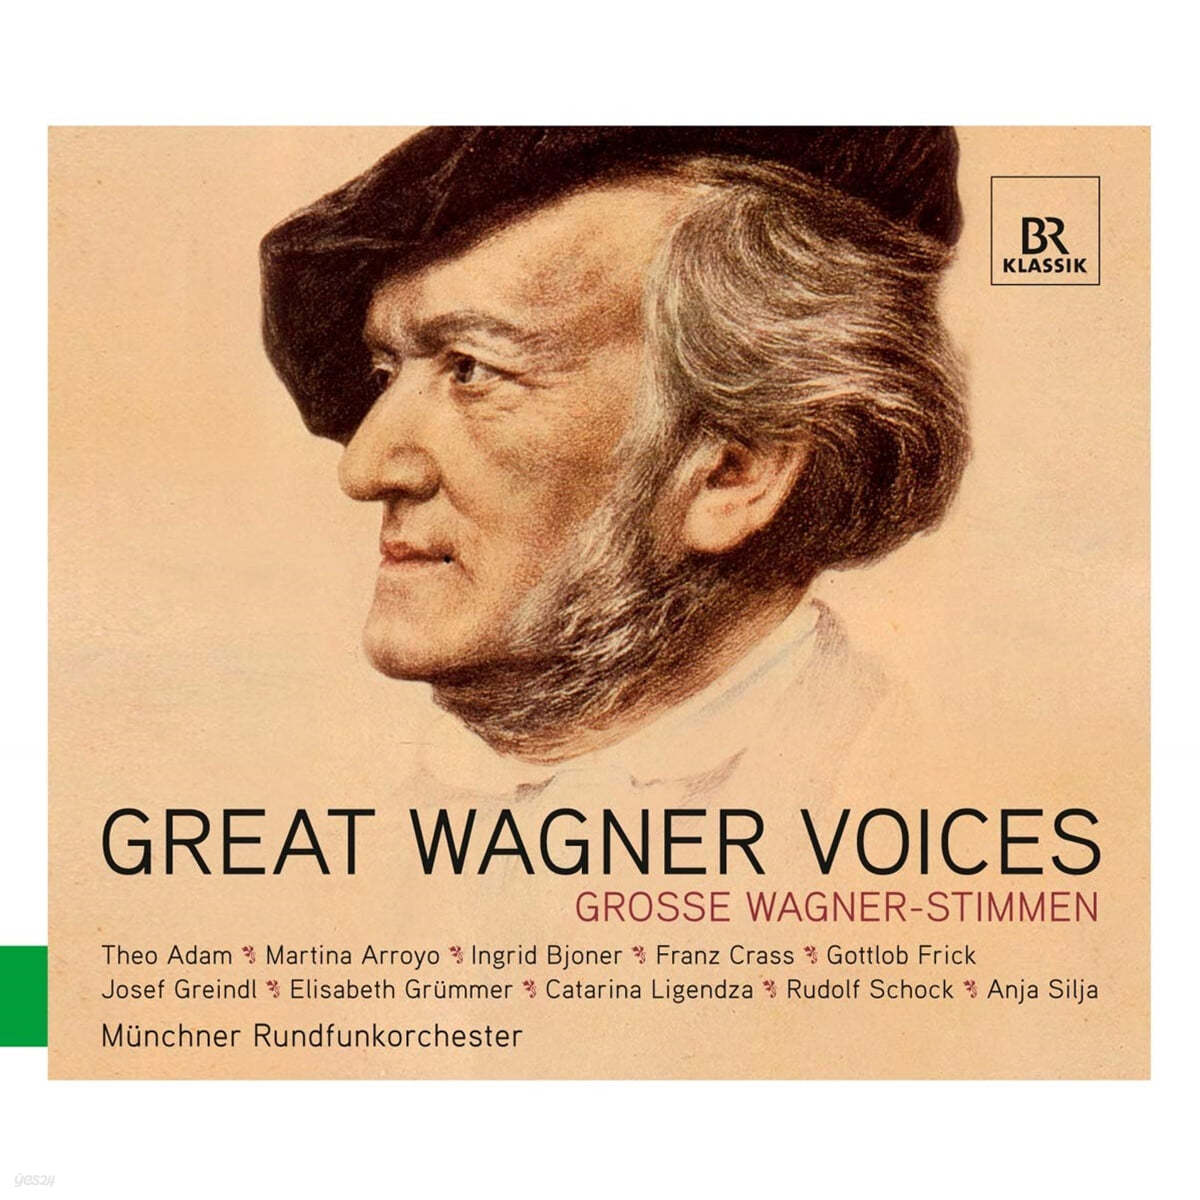 Munchner Rundfunkorchester 그레이트 바그너 보이시스 (Great Wagner Voices) 